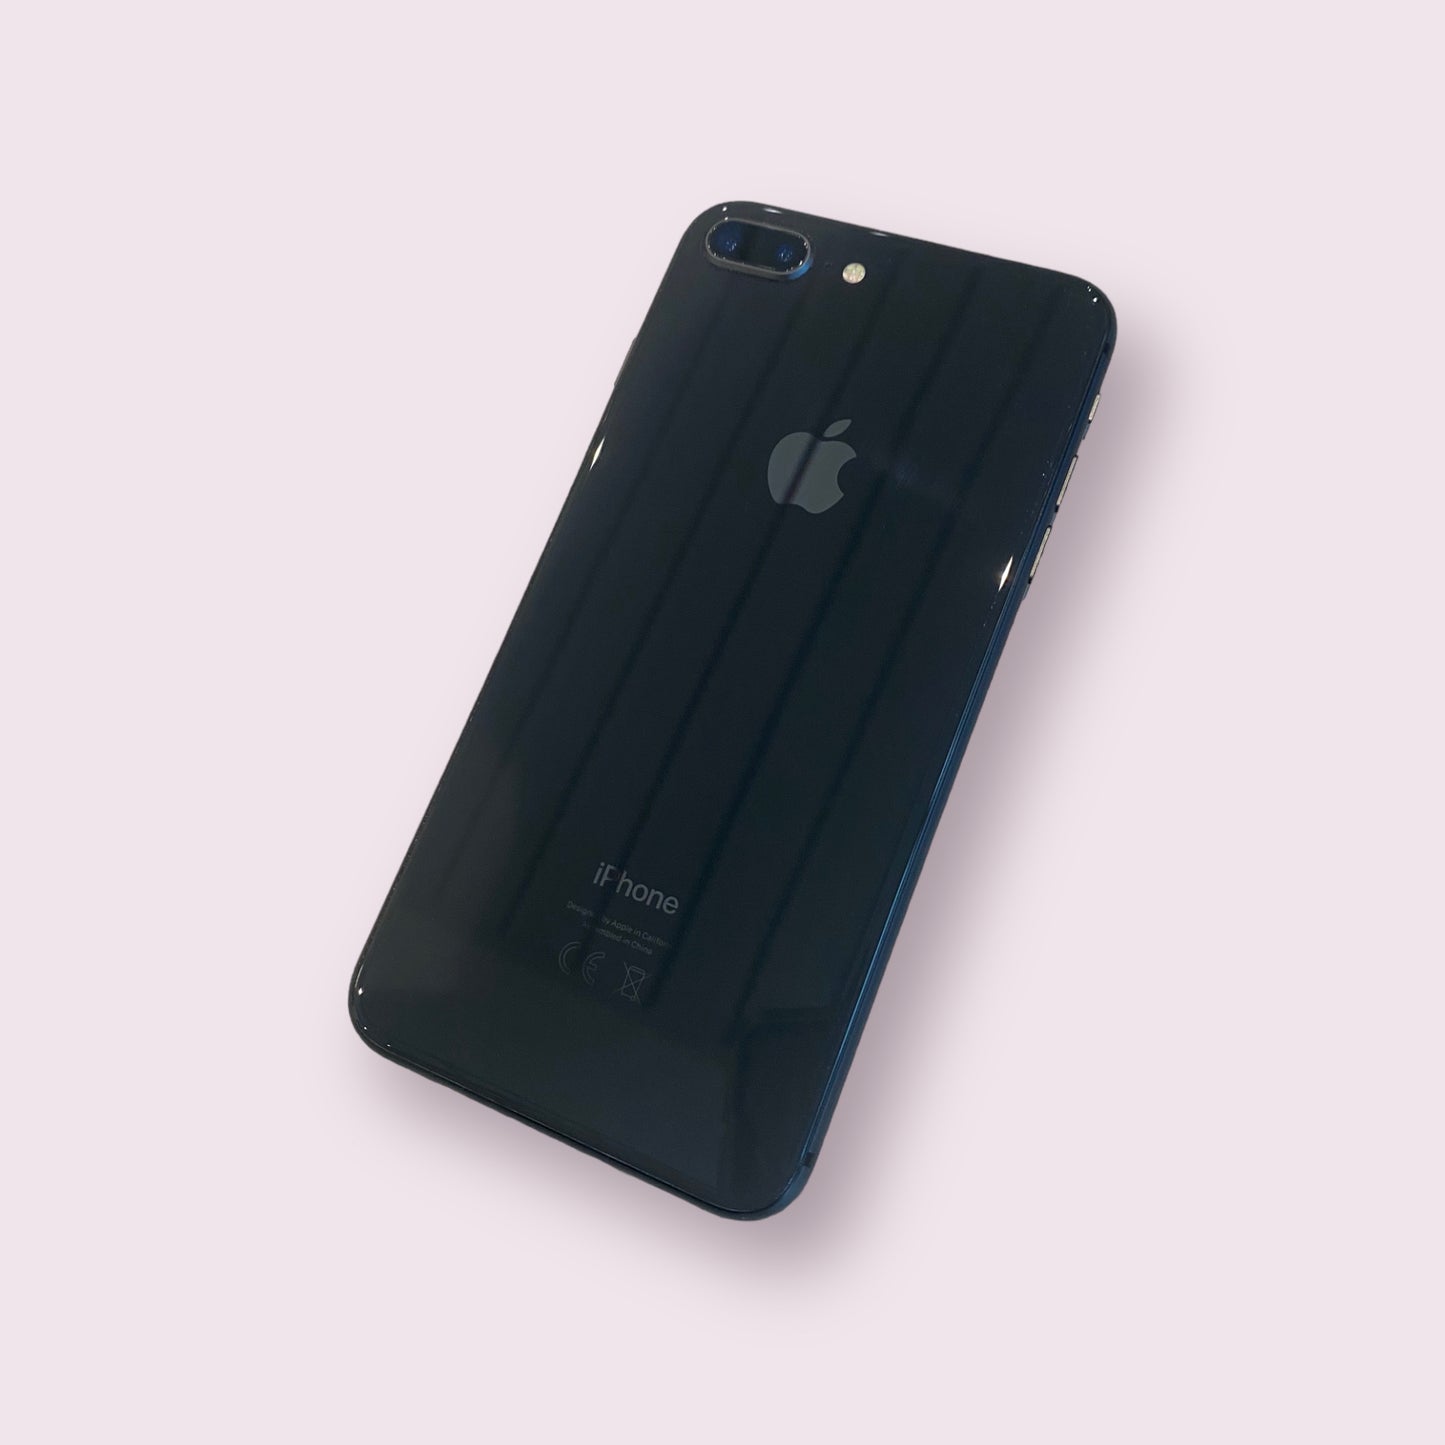 Apple iPhone 8 Plus Space Grey 64GB Unlocked - Grade A - BH 100%